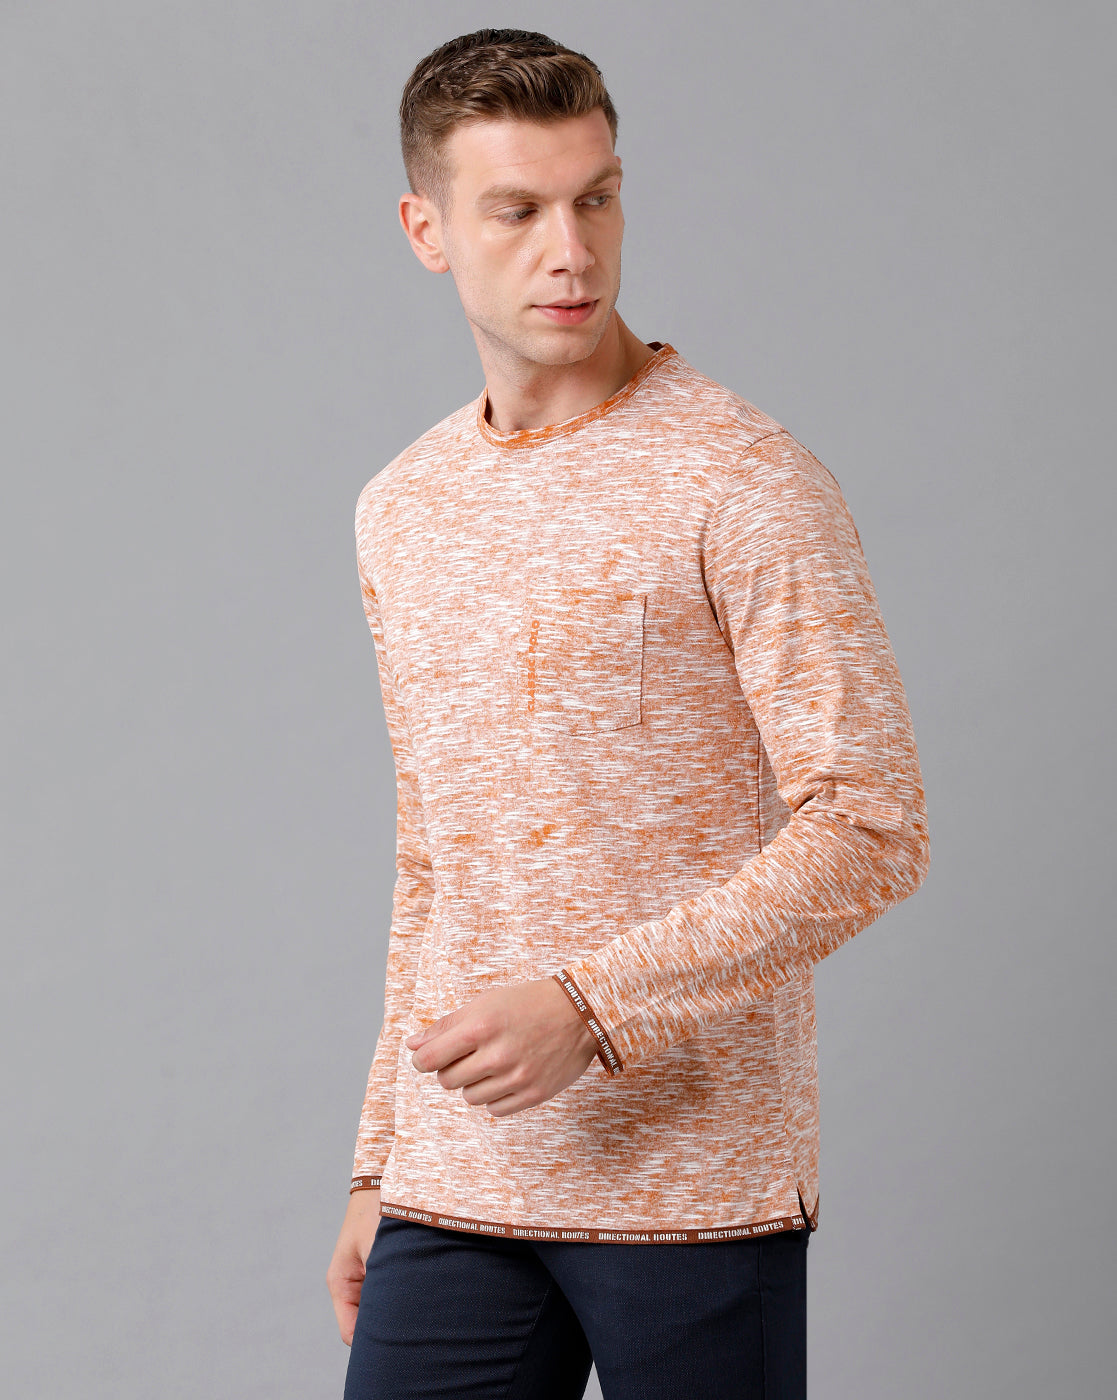 Classic Polo Men's Cotton Self Design Full Sleeve Slim Fit Round Neck Peach Color T-Shirt | Baleno Fs - 481 B